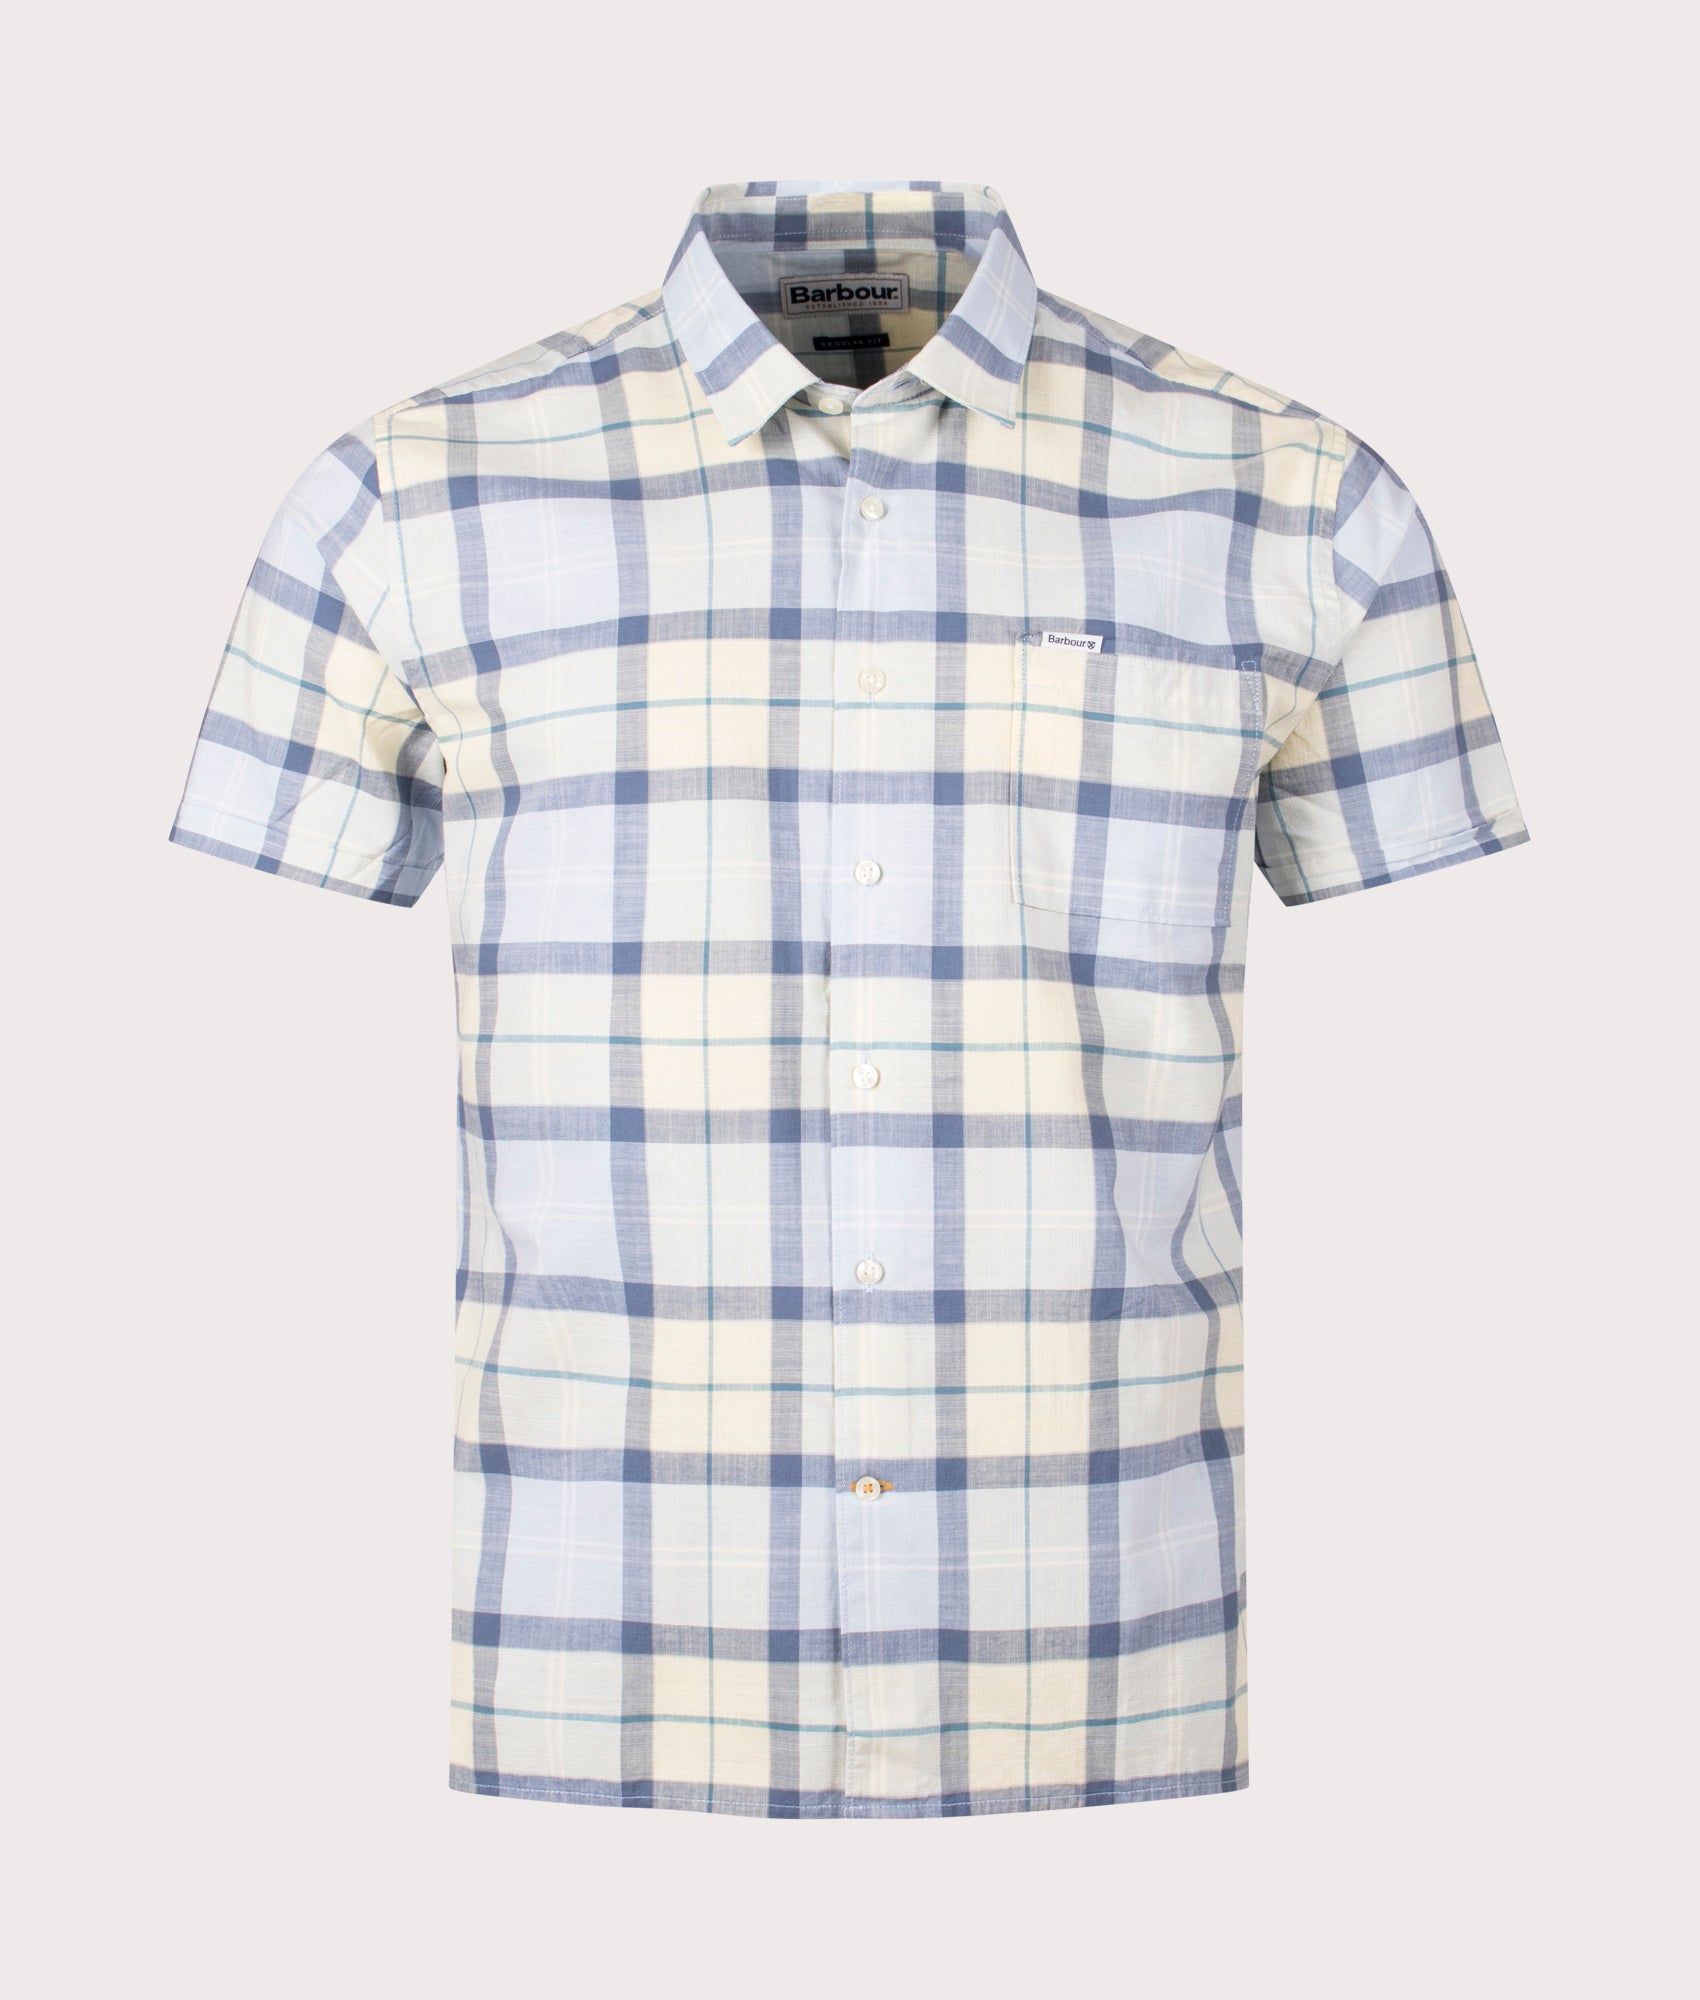 Barbour Lifestyle Mens Short Sleeve Gordon Shirt - Colour: TN25 Sandsend Tartan - Size: Large